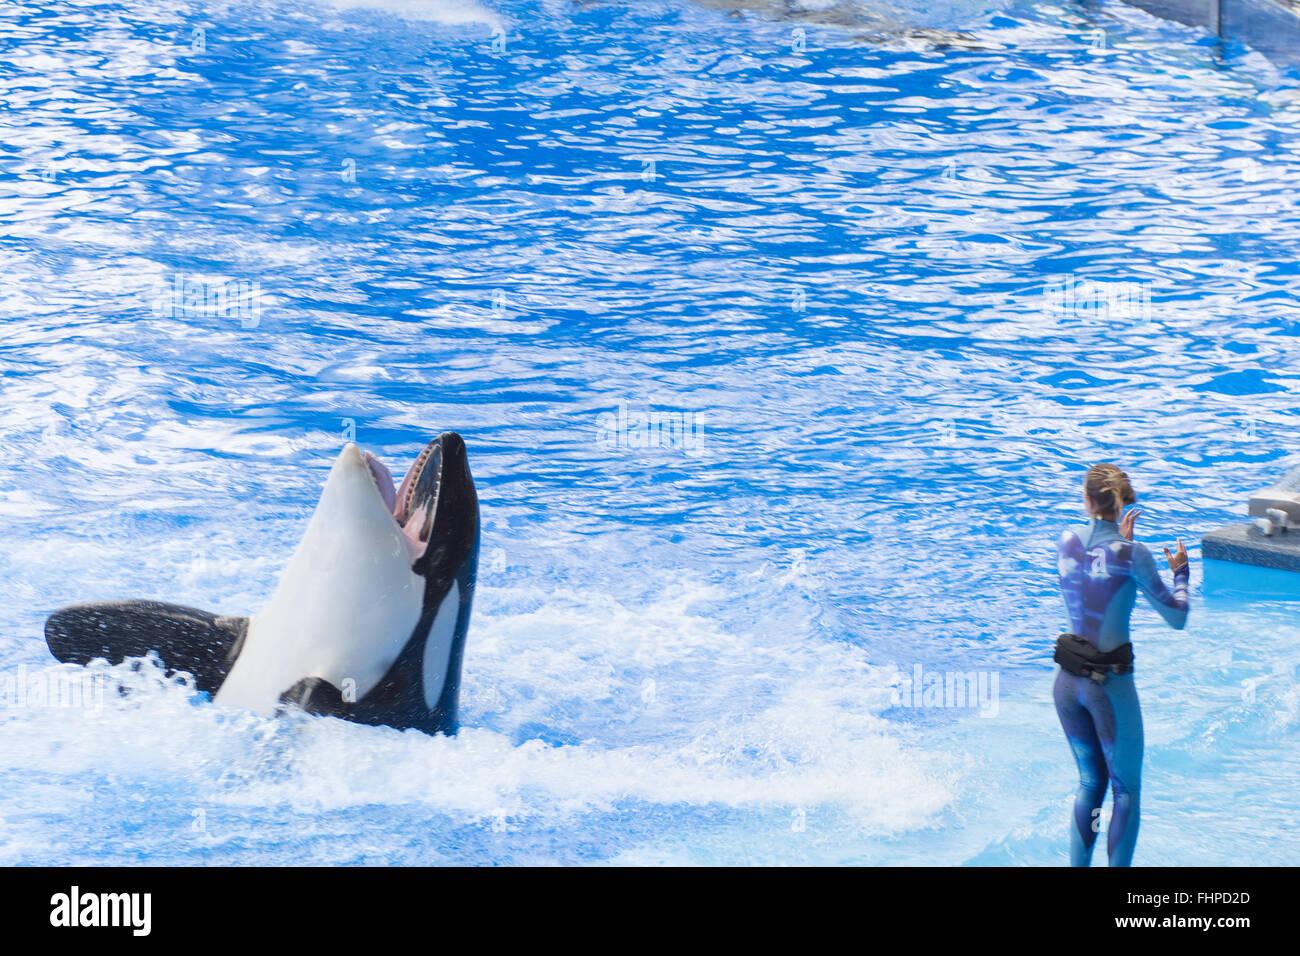 Orca Killer whales at Sea World Orlando Florida captive orca Stock Photo